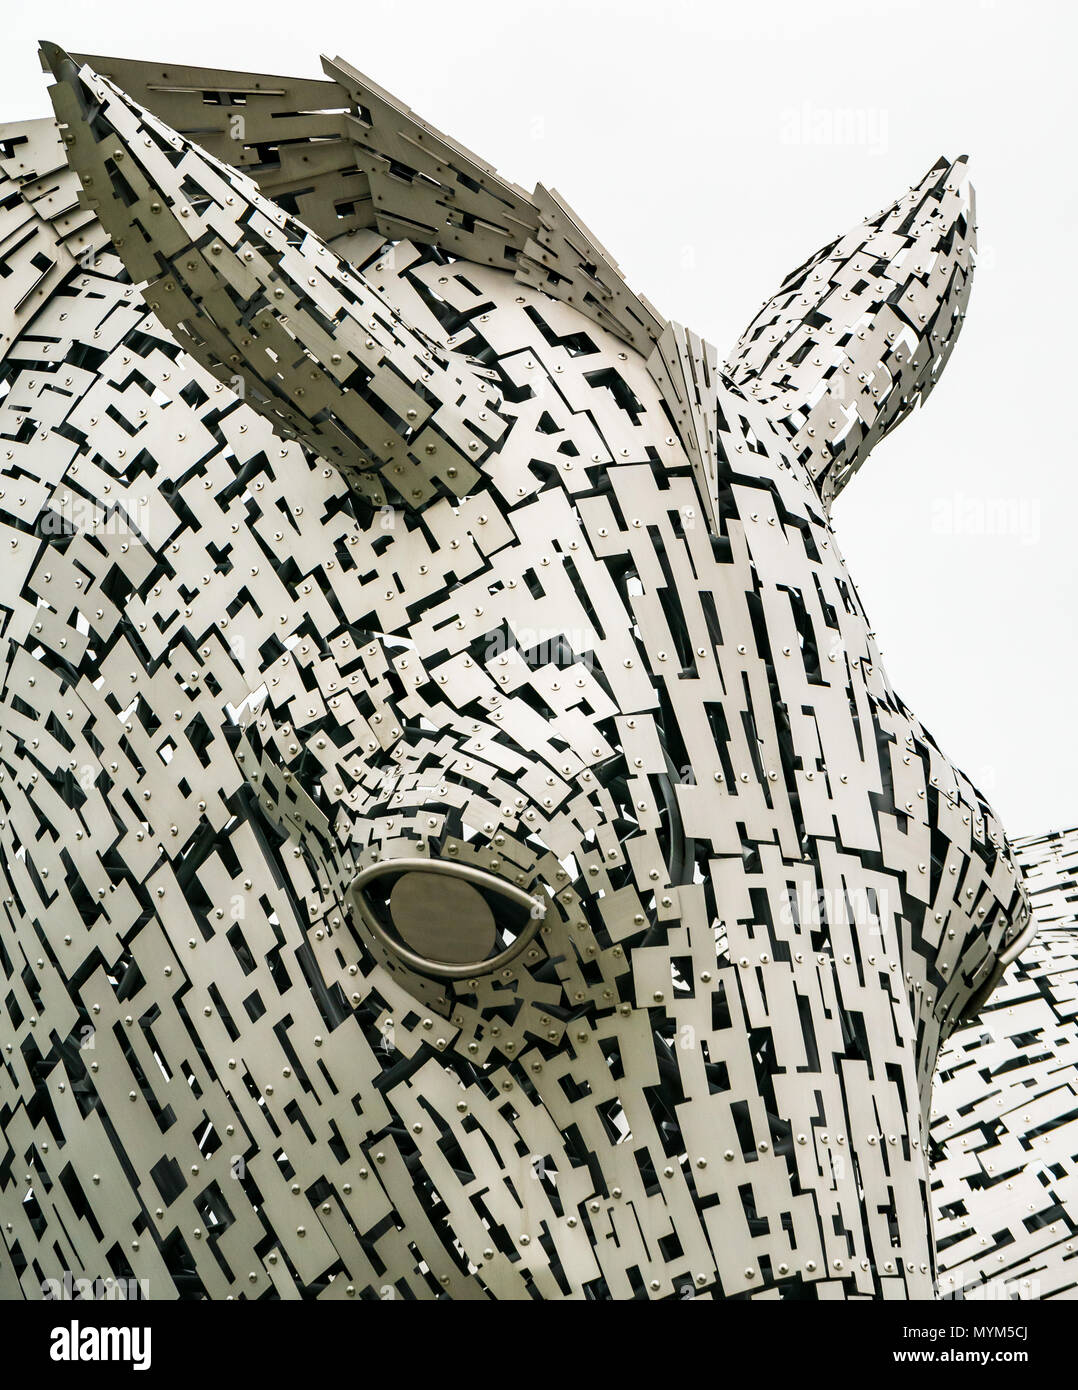 Primer plano de la intrincada escultura de cabeza de caballo de metal de Kelpie por Andy Scott, Helix Park, Falkirk, Escocia, Reino Unido Foto de stock